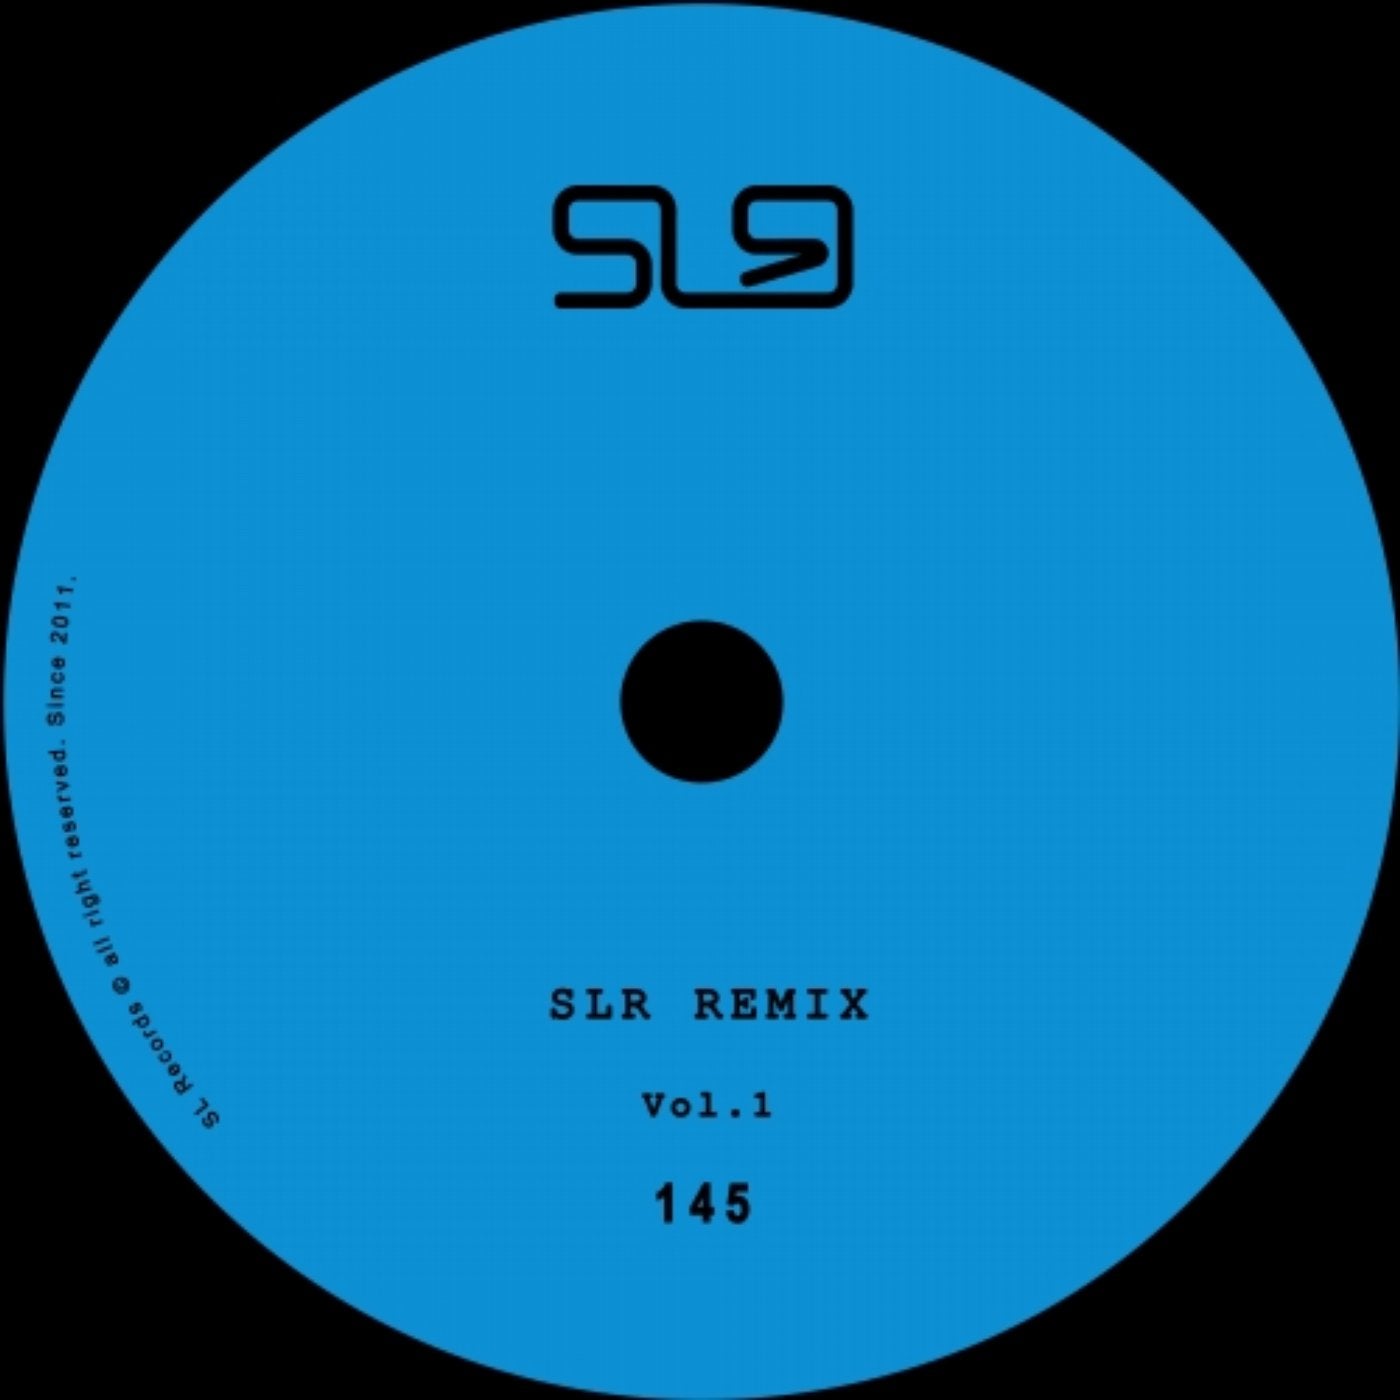 SLR Remix Vol. 1